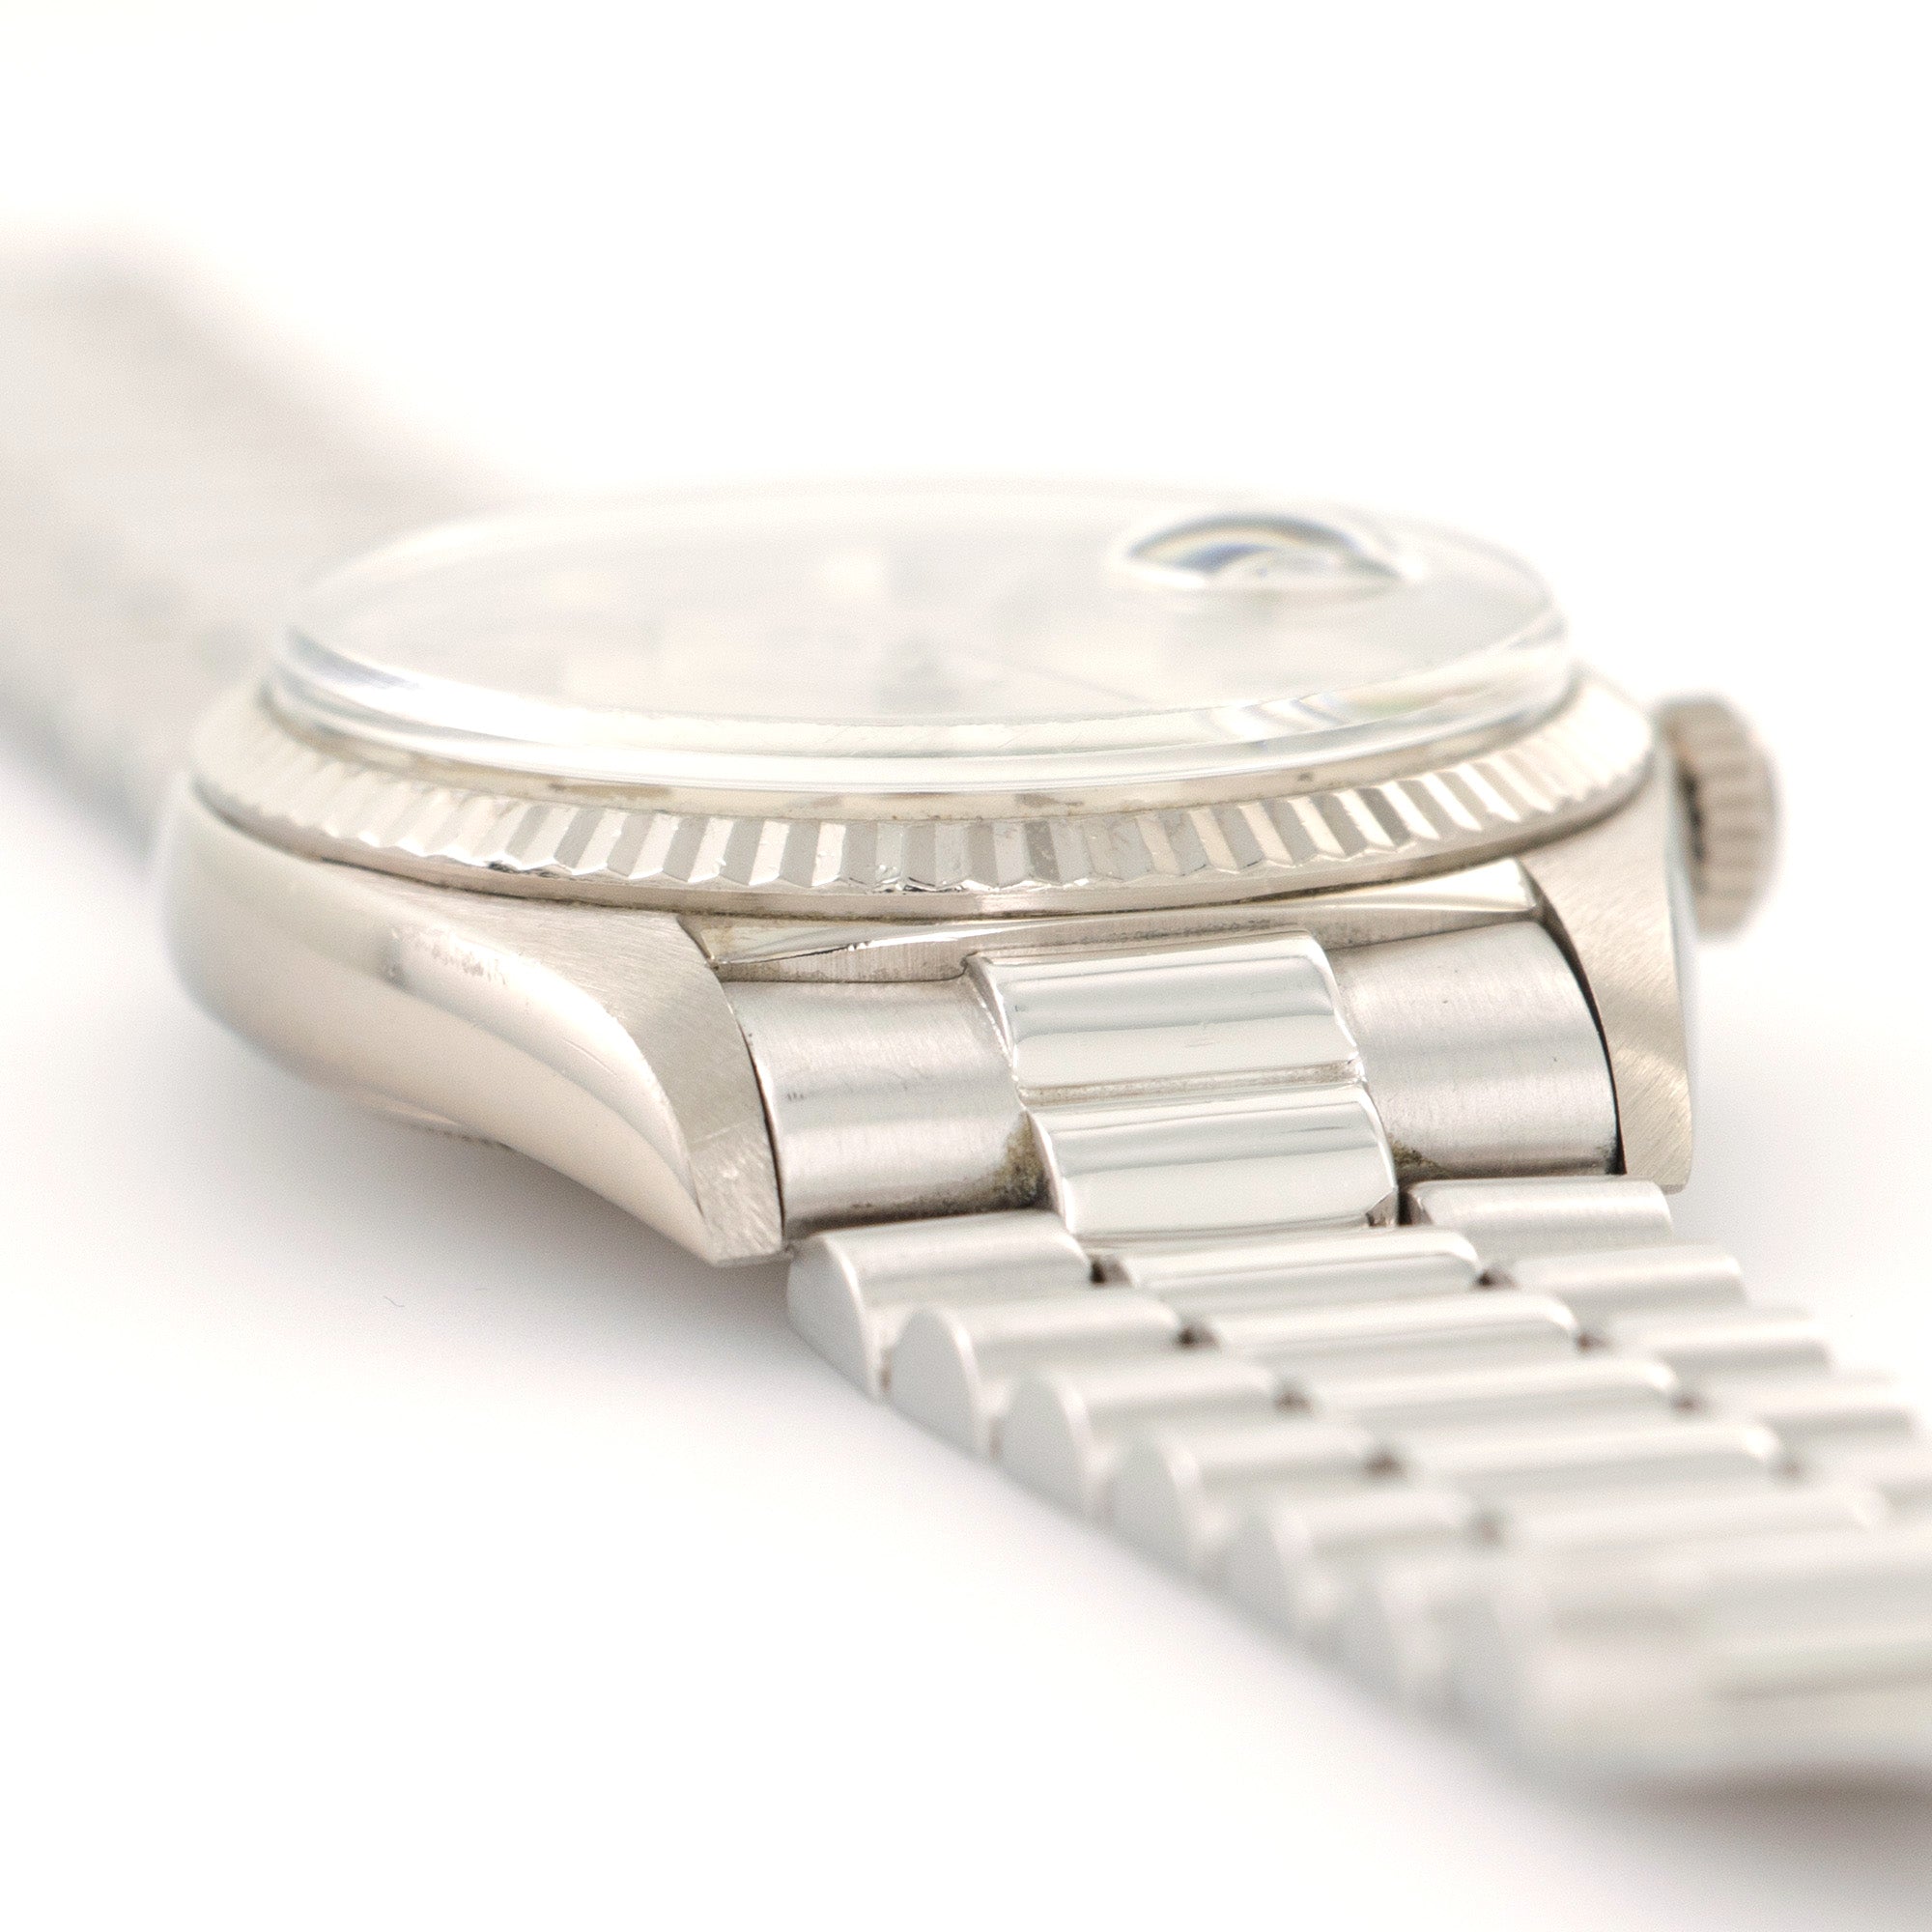 Rolex - Rolex White Gold Day-Date Watch Ref. 1803 with Original Warranty Paper - The Keystone Watches